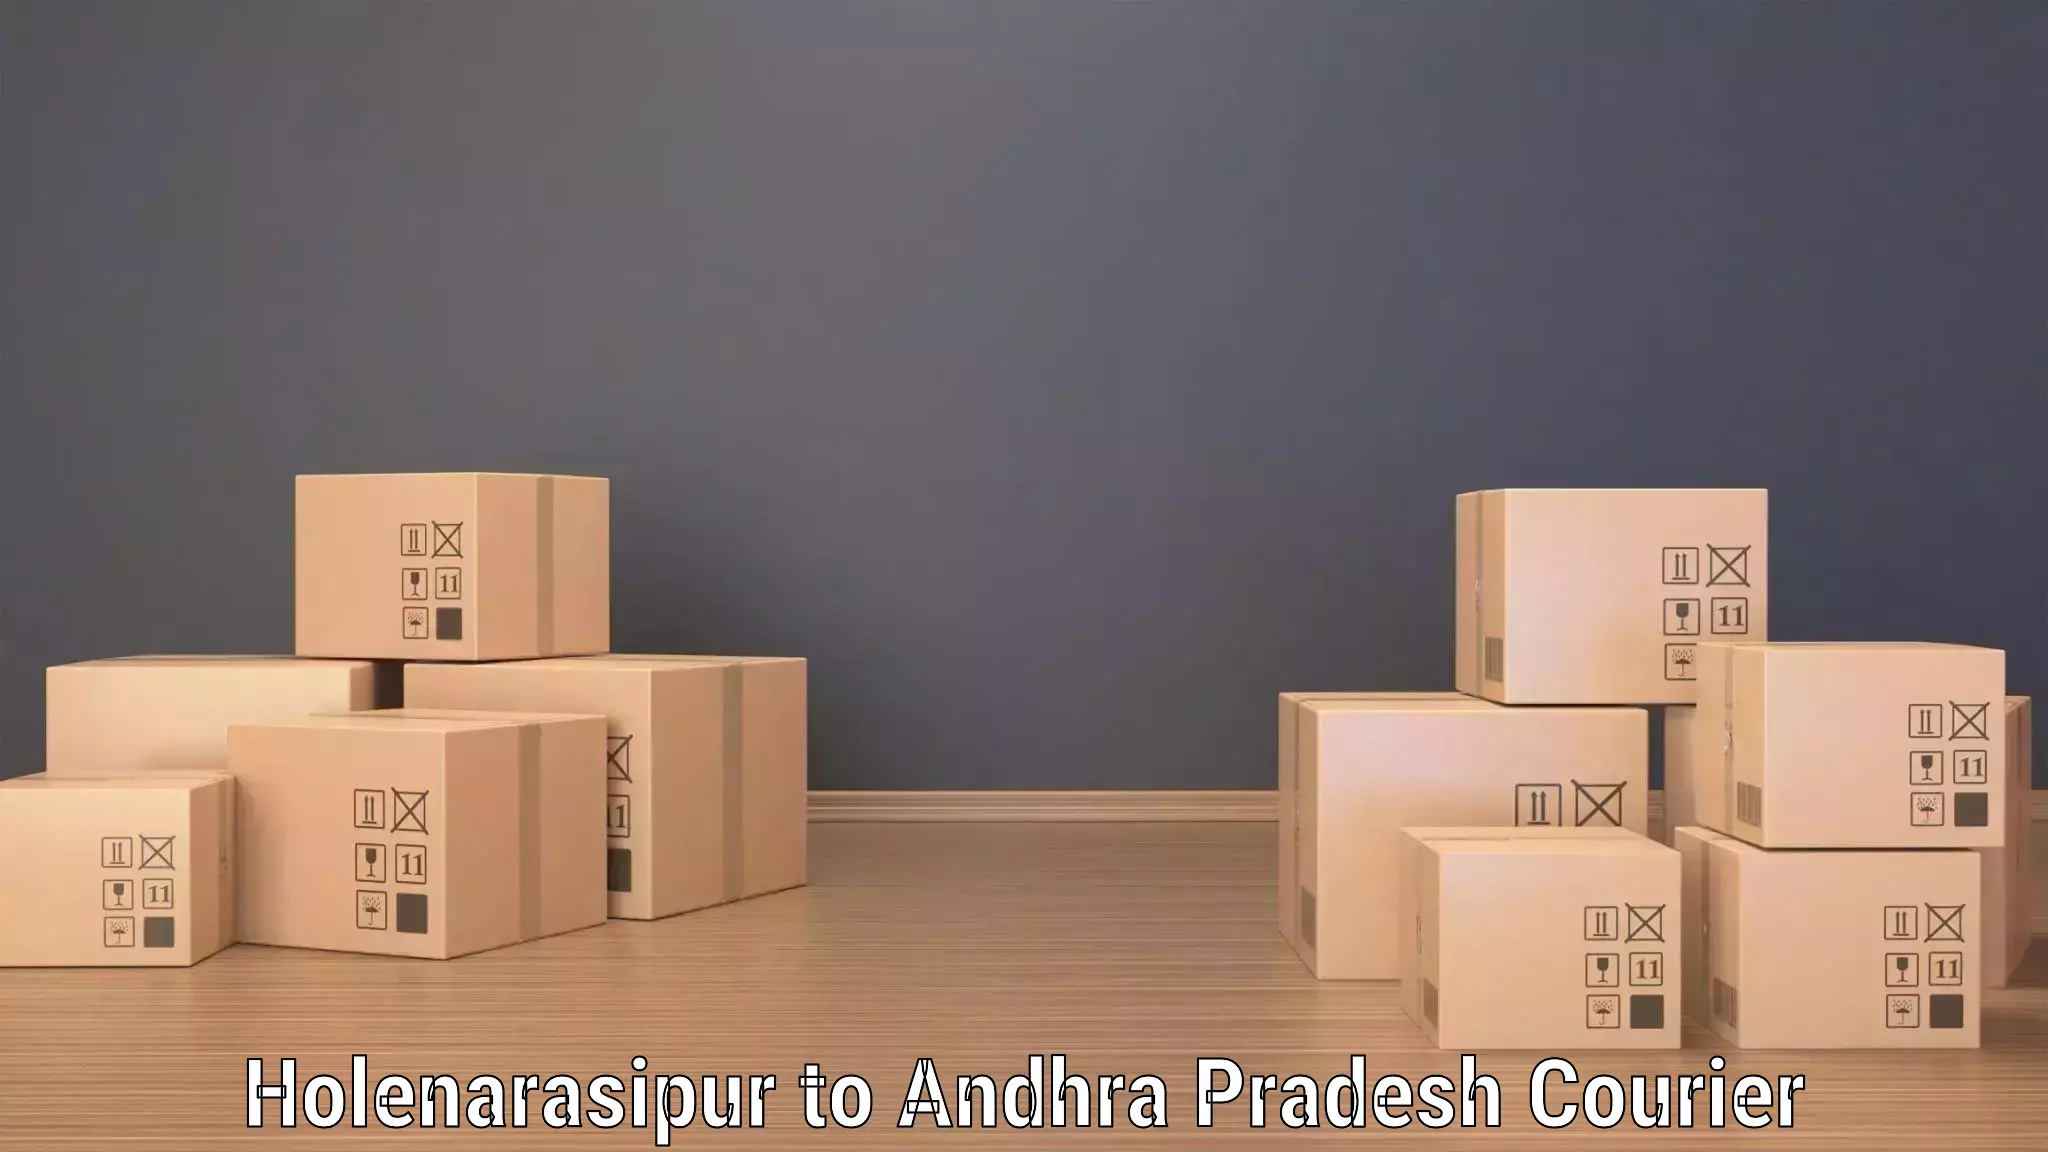 Courier service innovation Holenarasipur to Tirupati